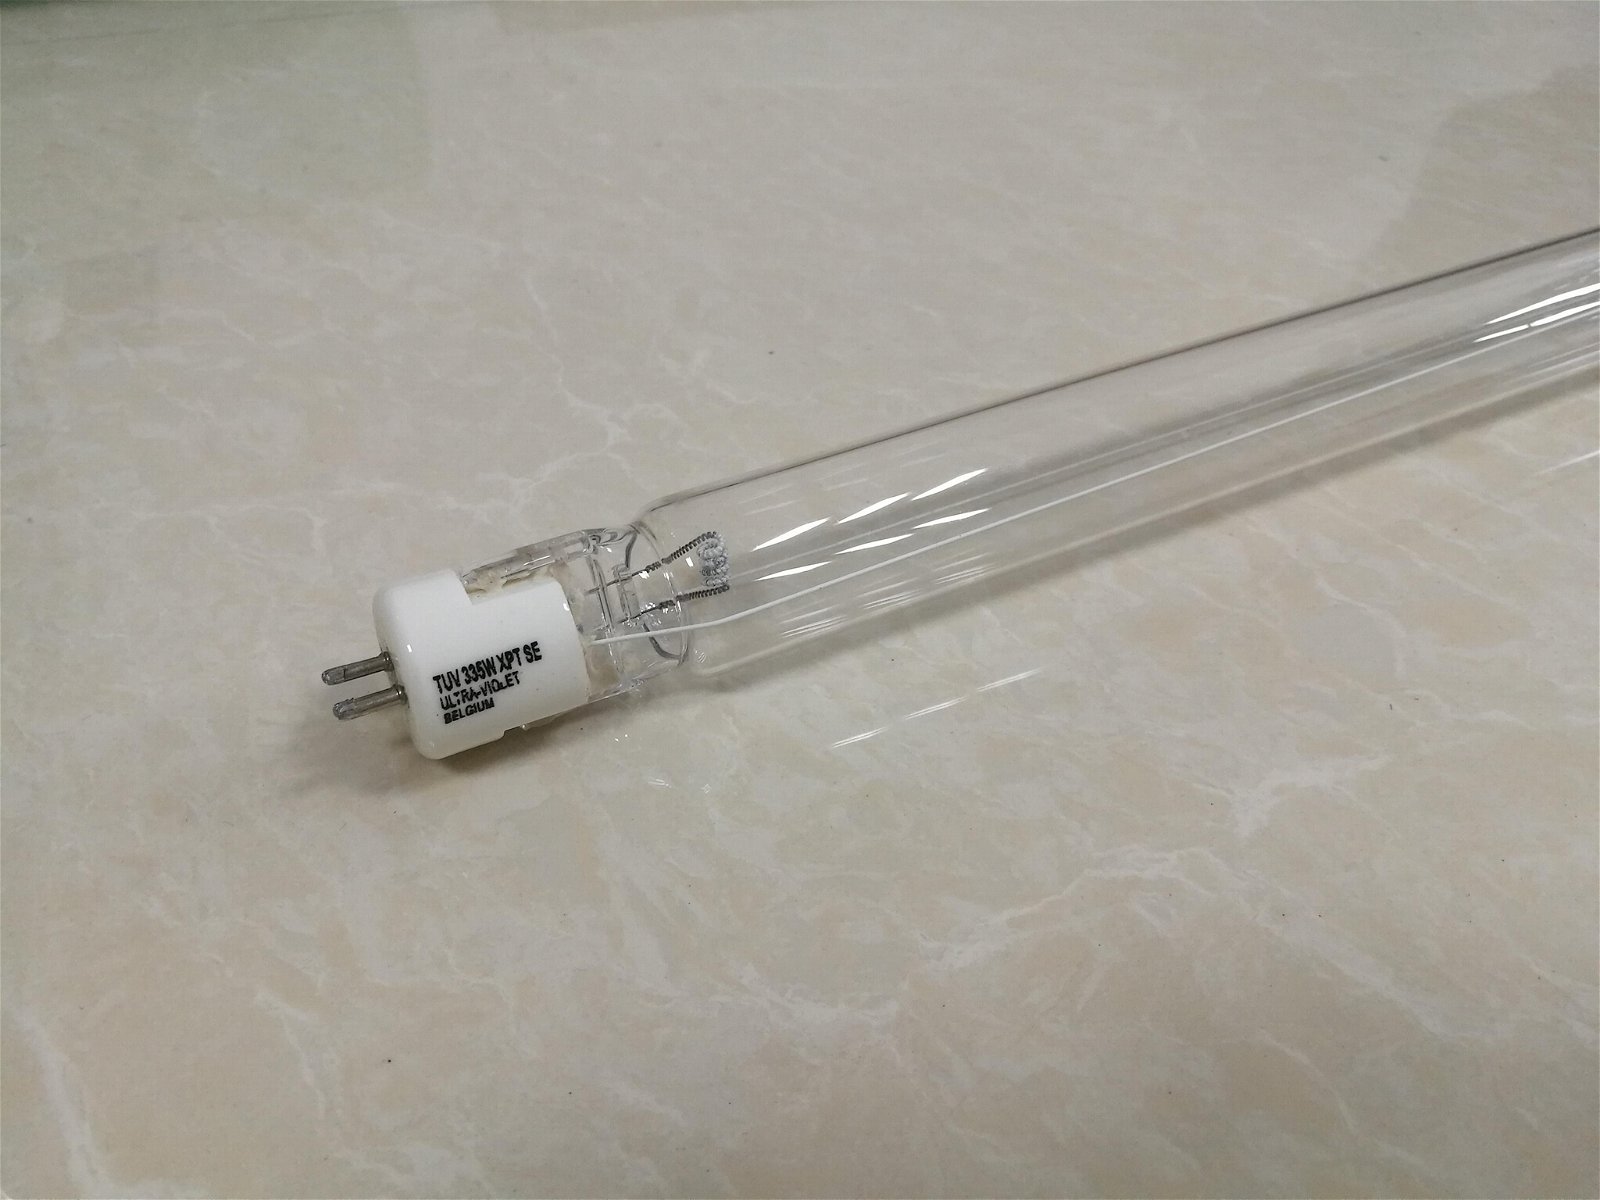 XLR-301Q Wedeco Equivalent Replacement Lamp 2